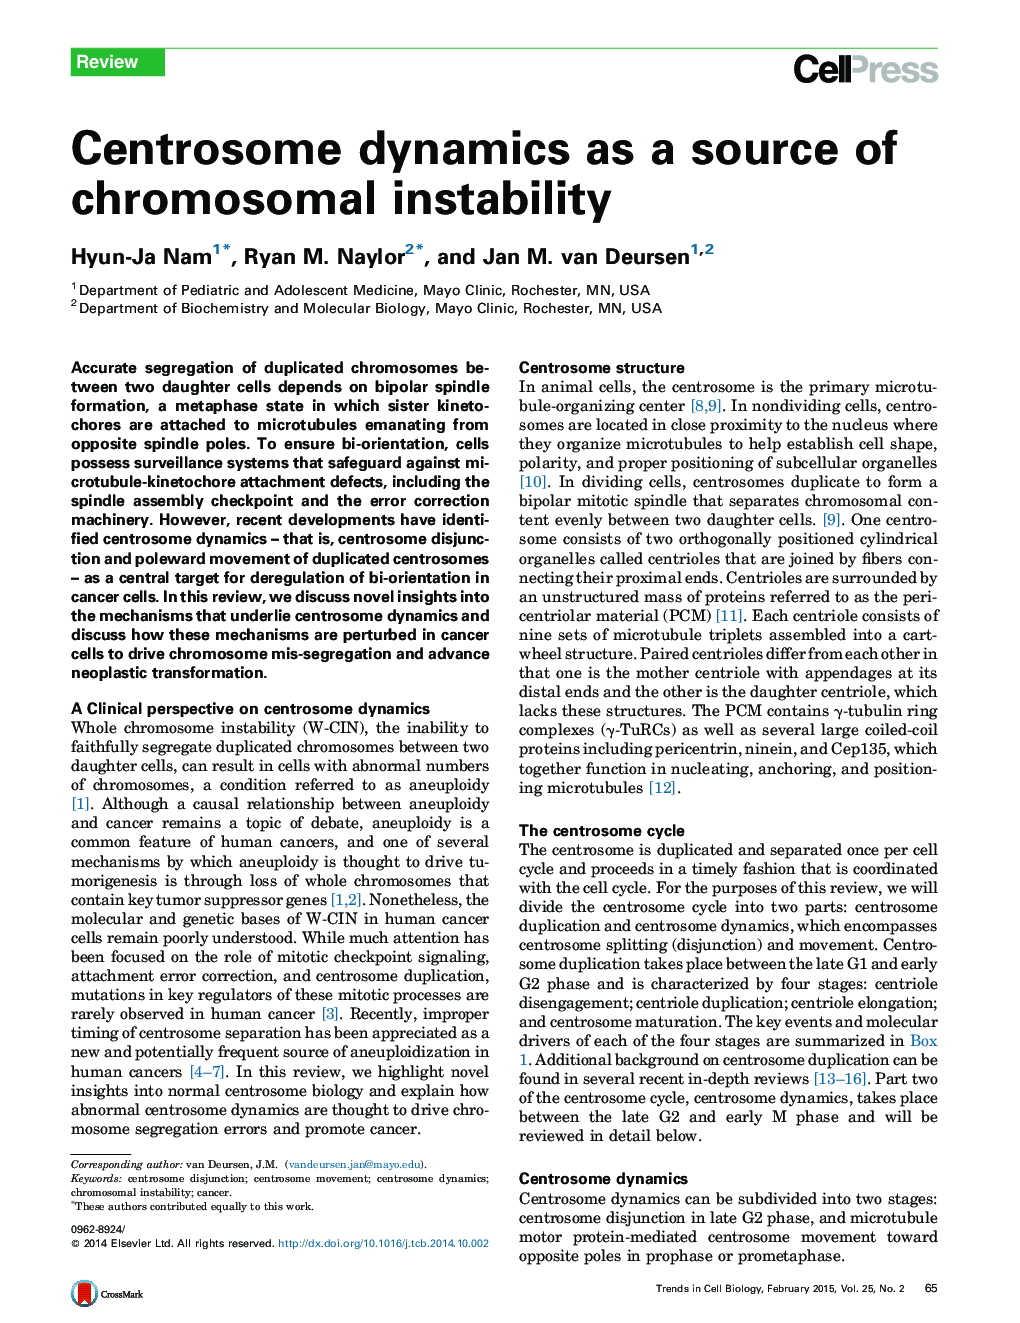 Centrosome dynamics as a source of chromosomal instability